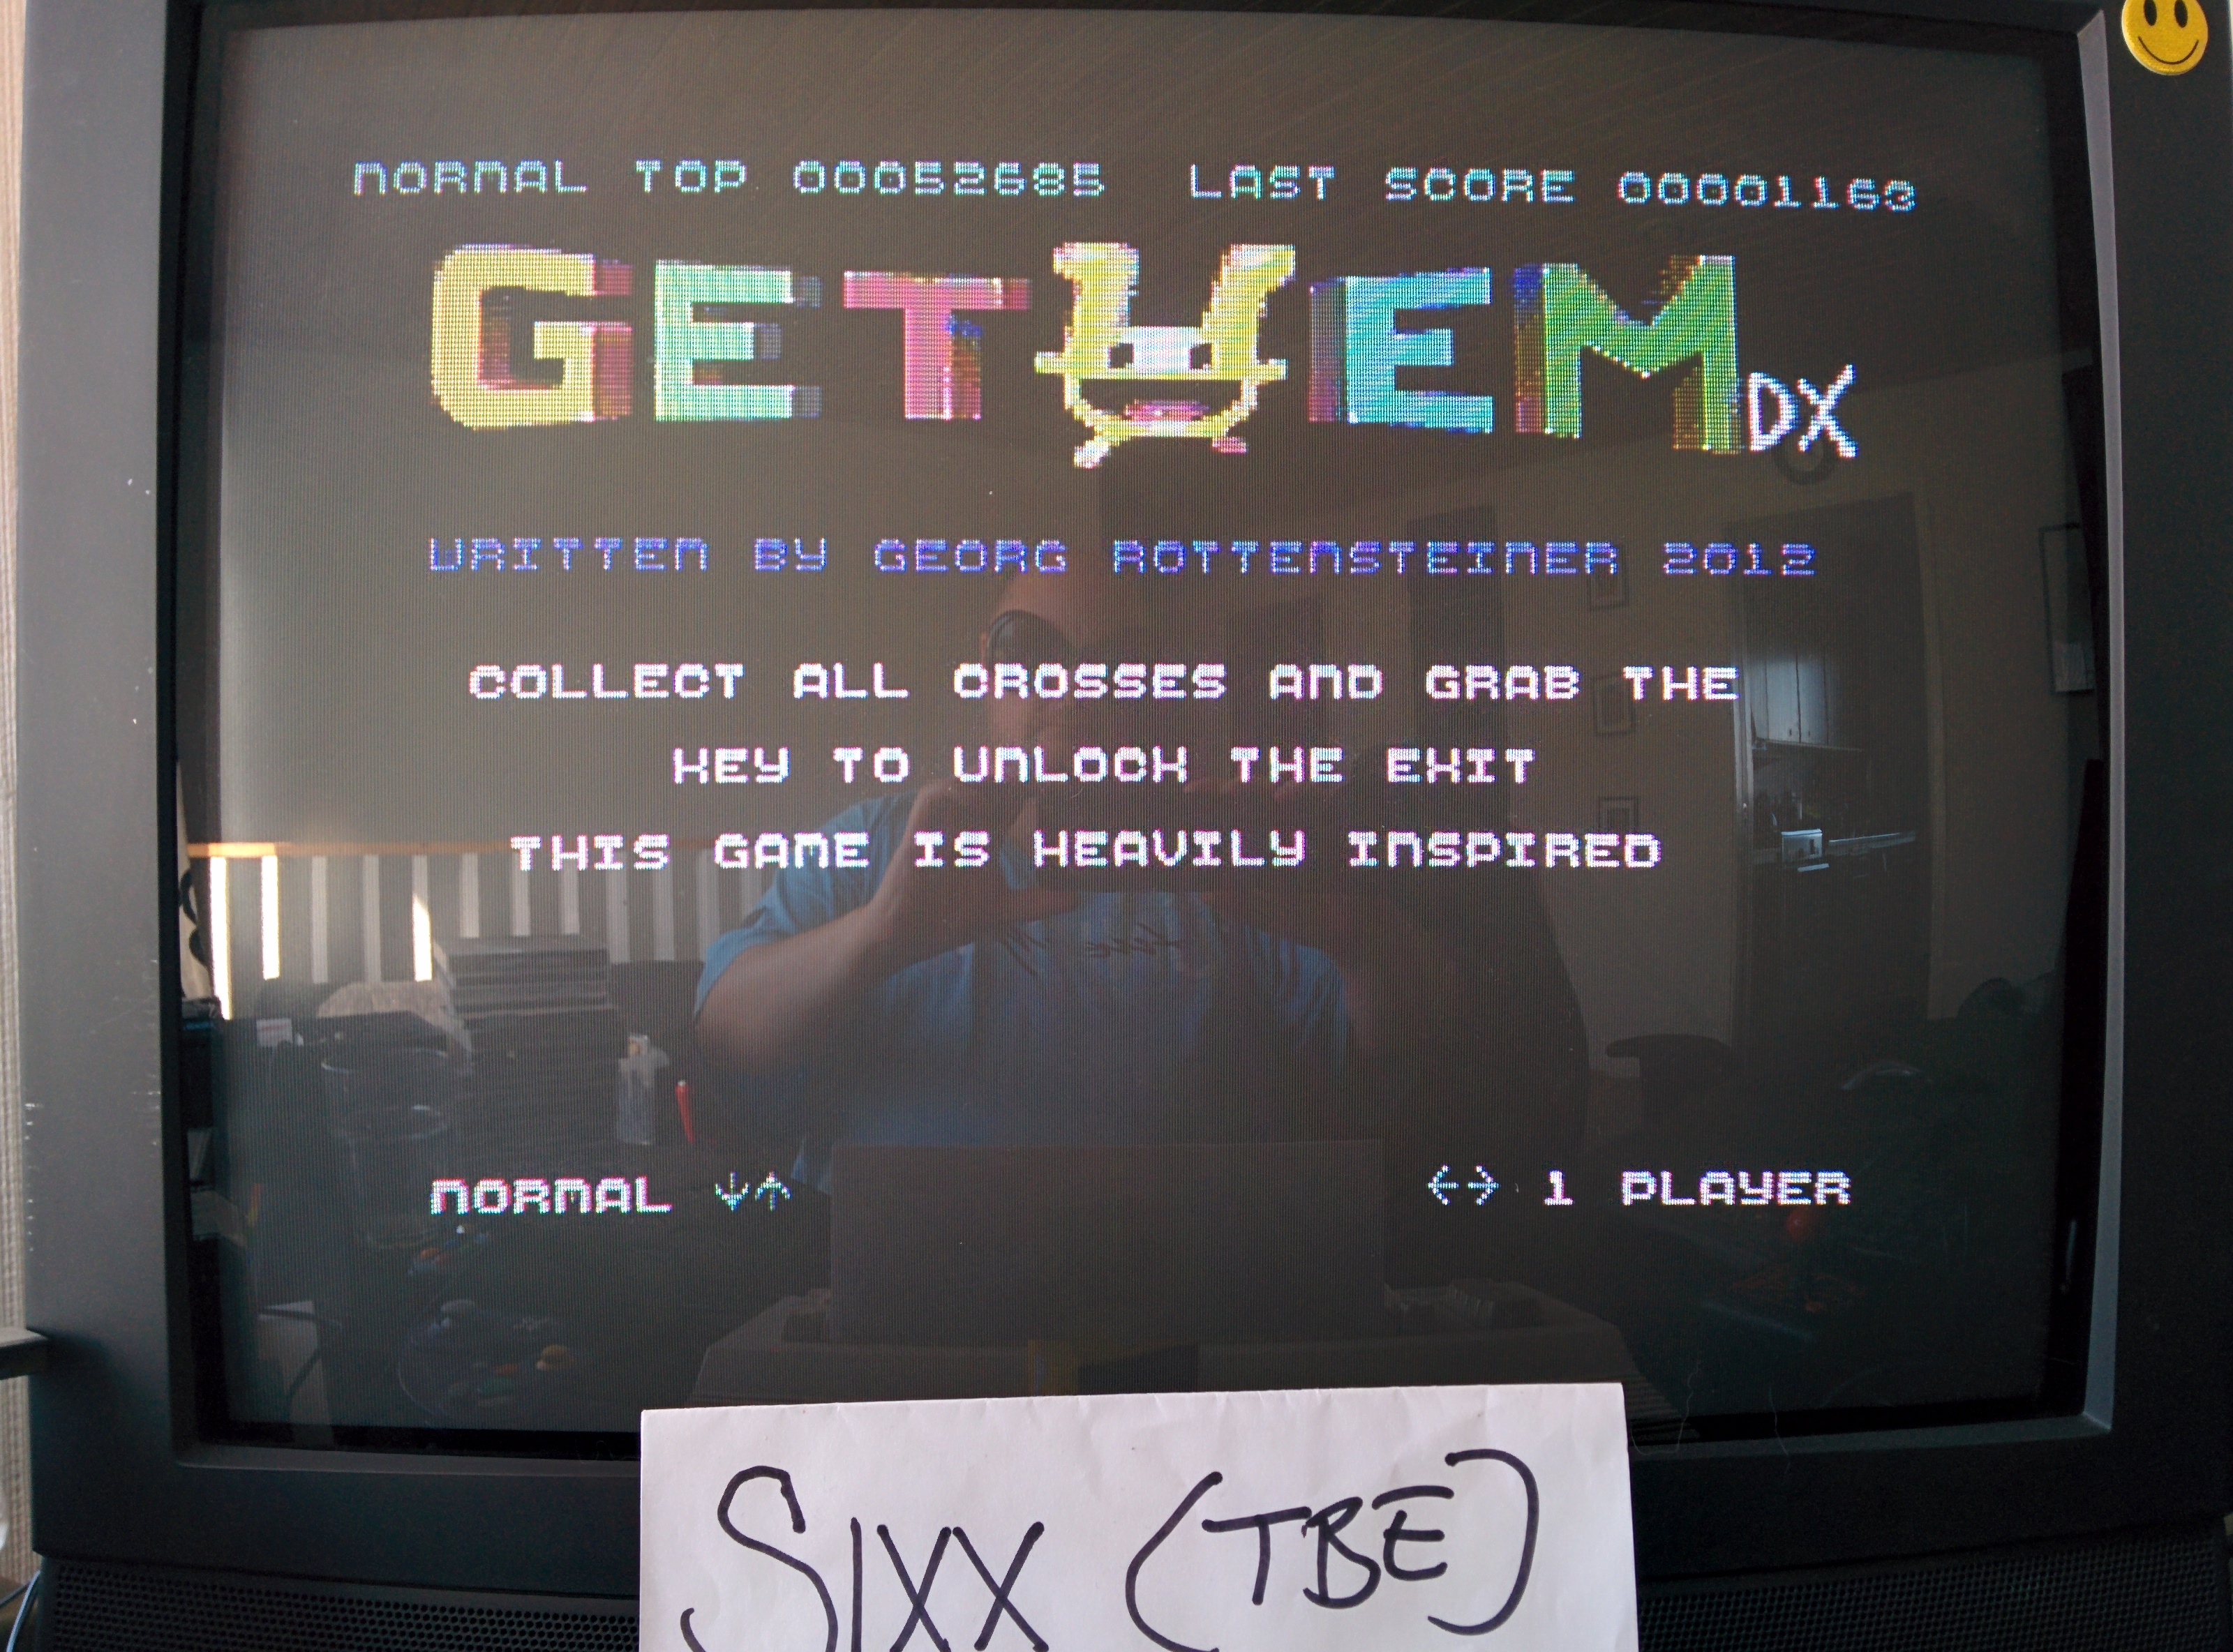 Sixx: Get 